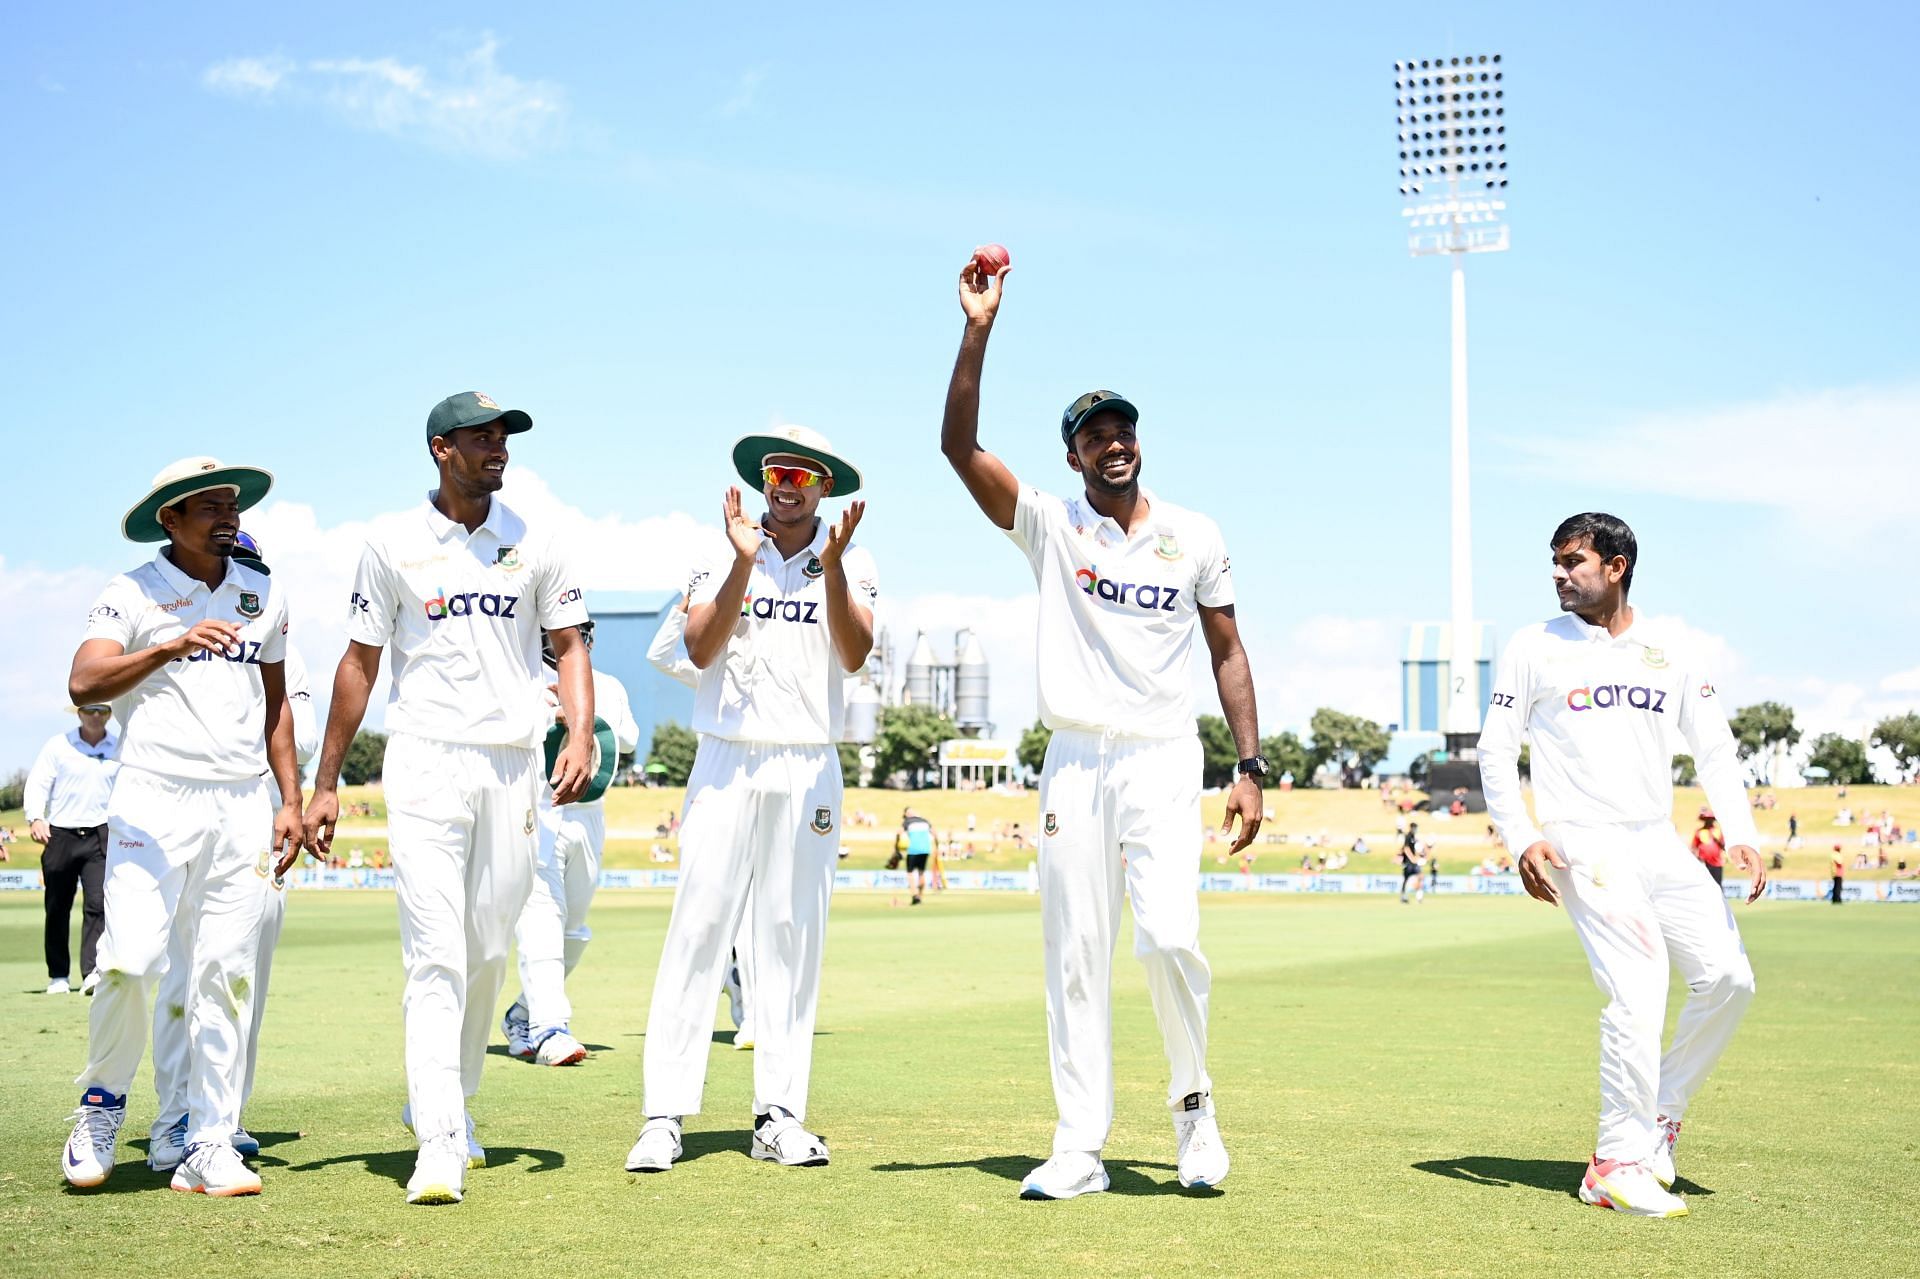 Ebadot Hossain took a six-wicket haul in the 2nd innings